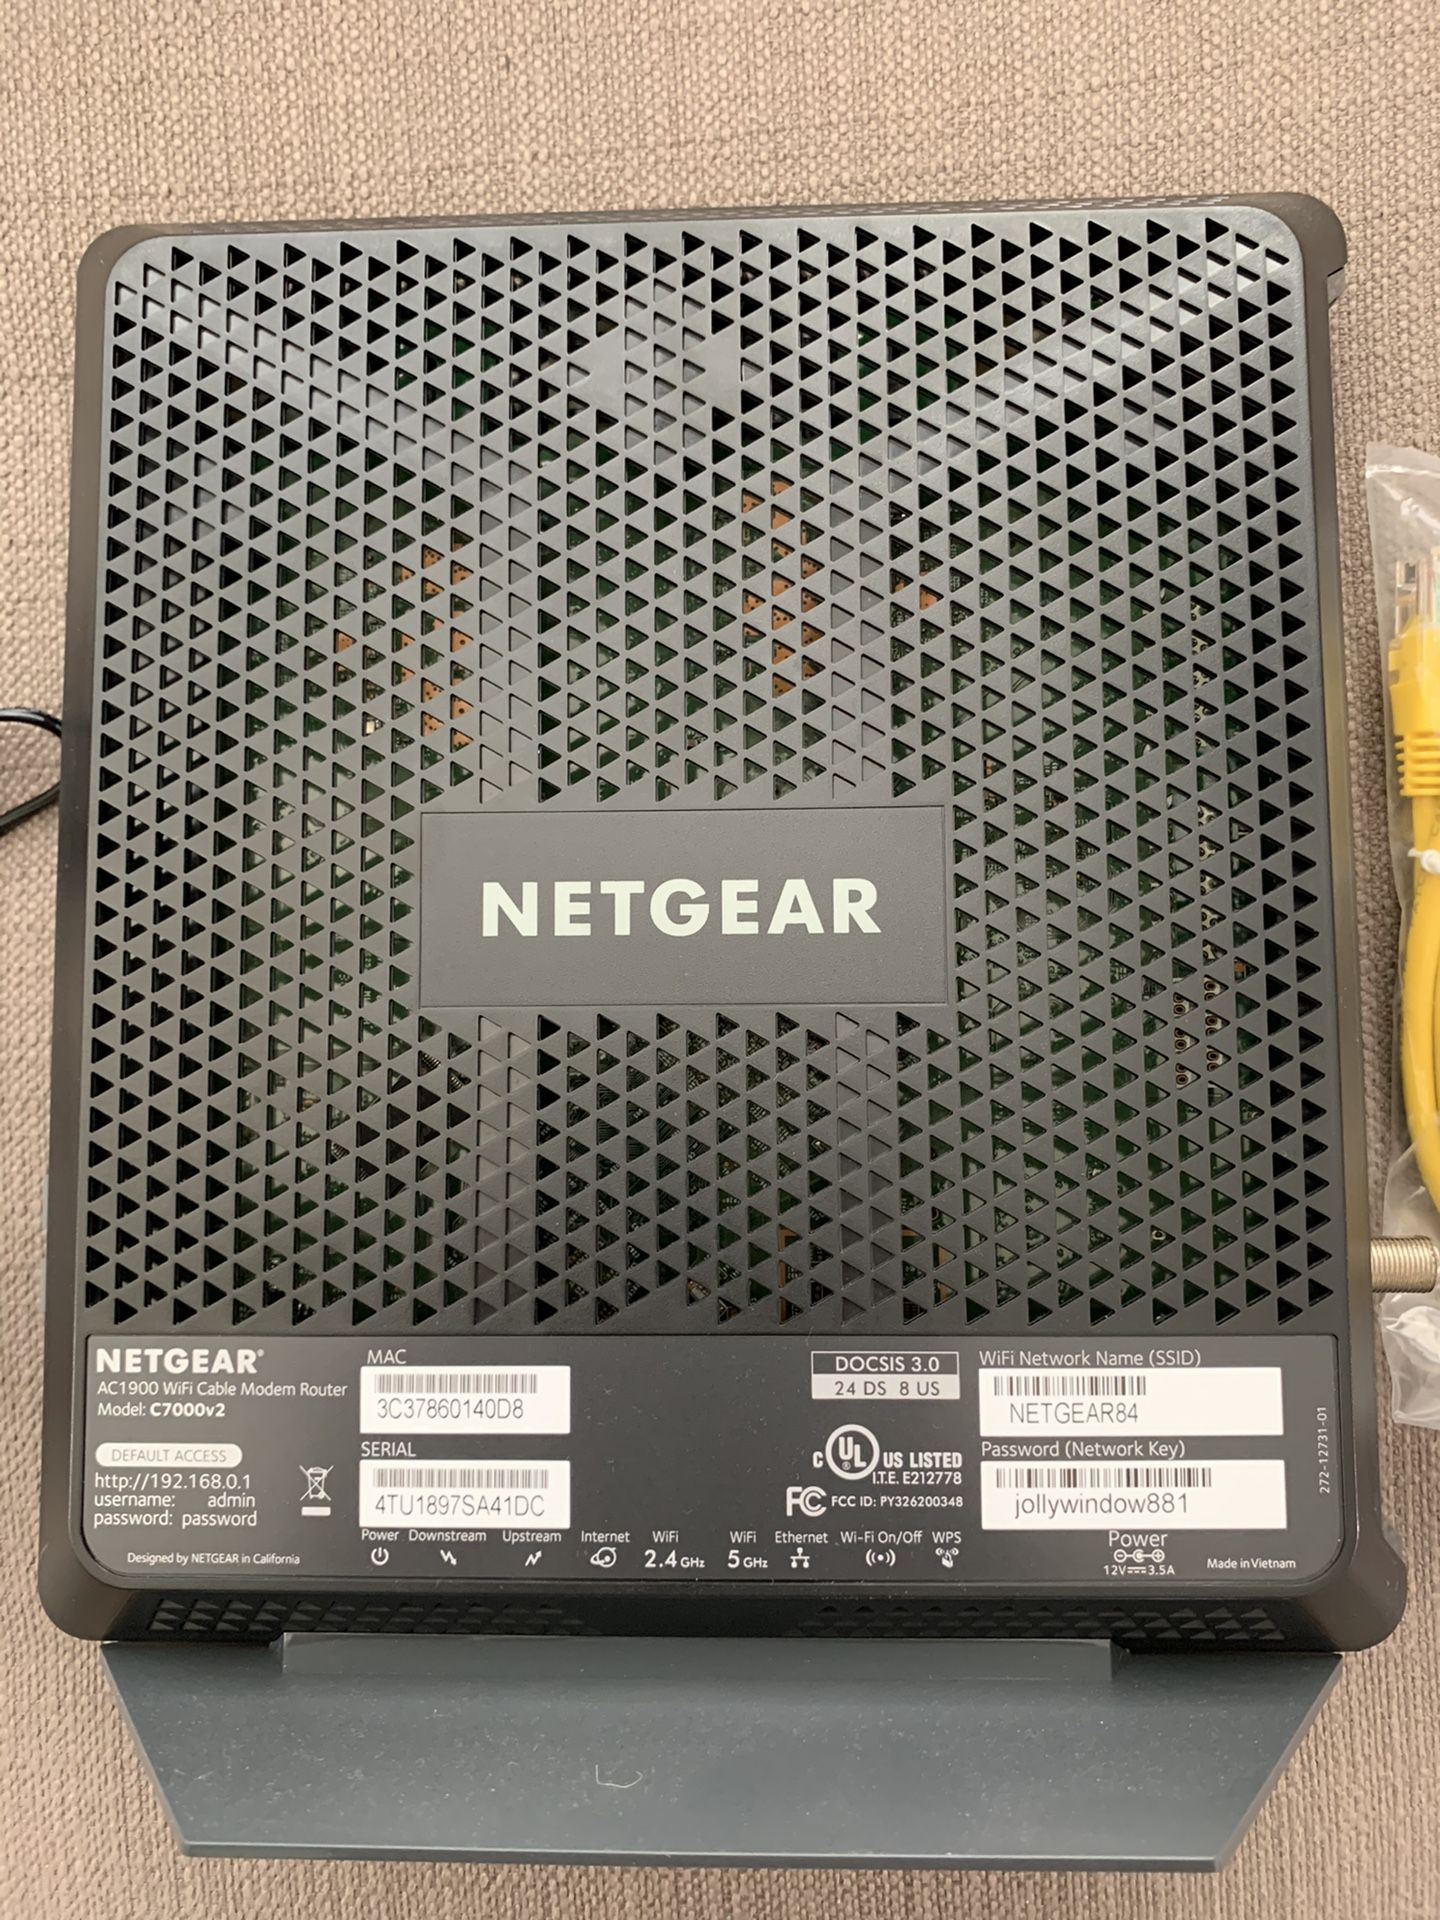 Netgear AC1900 cable modem router combo